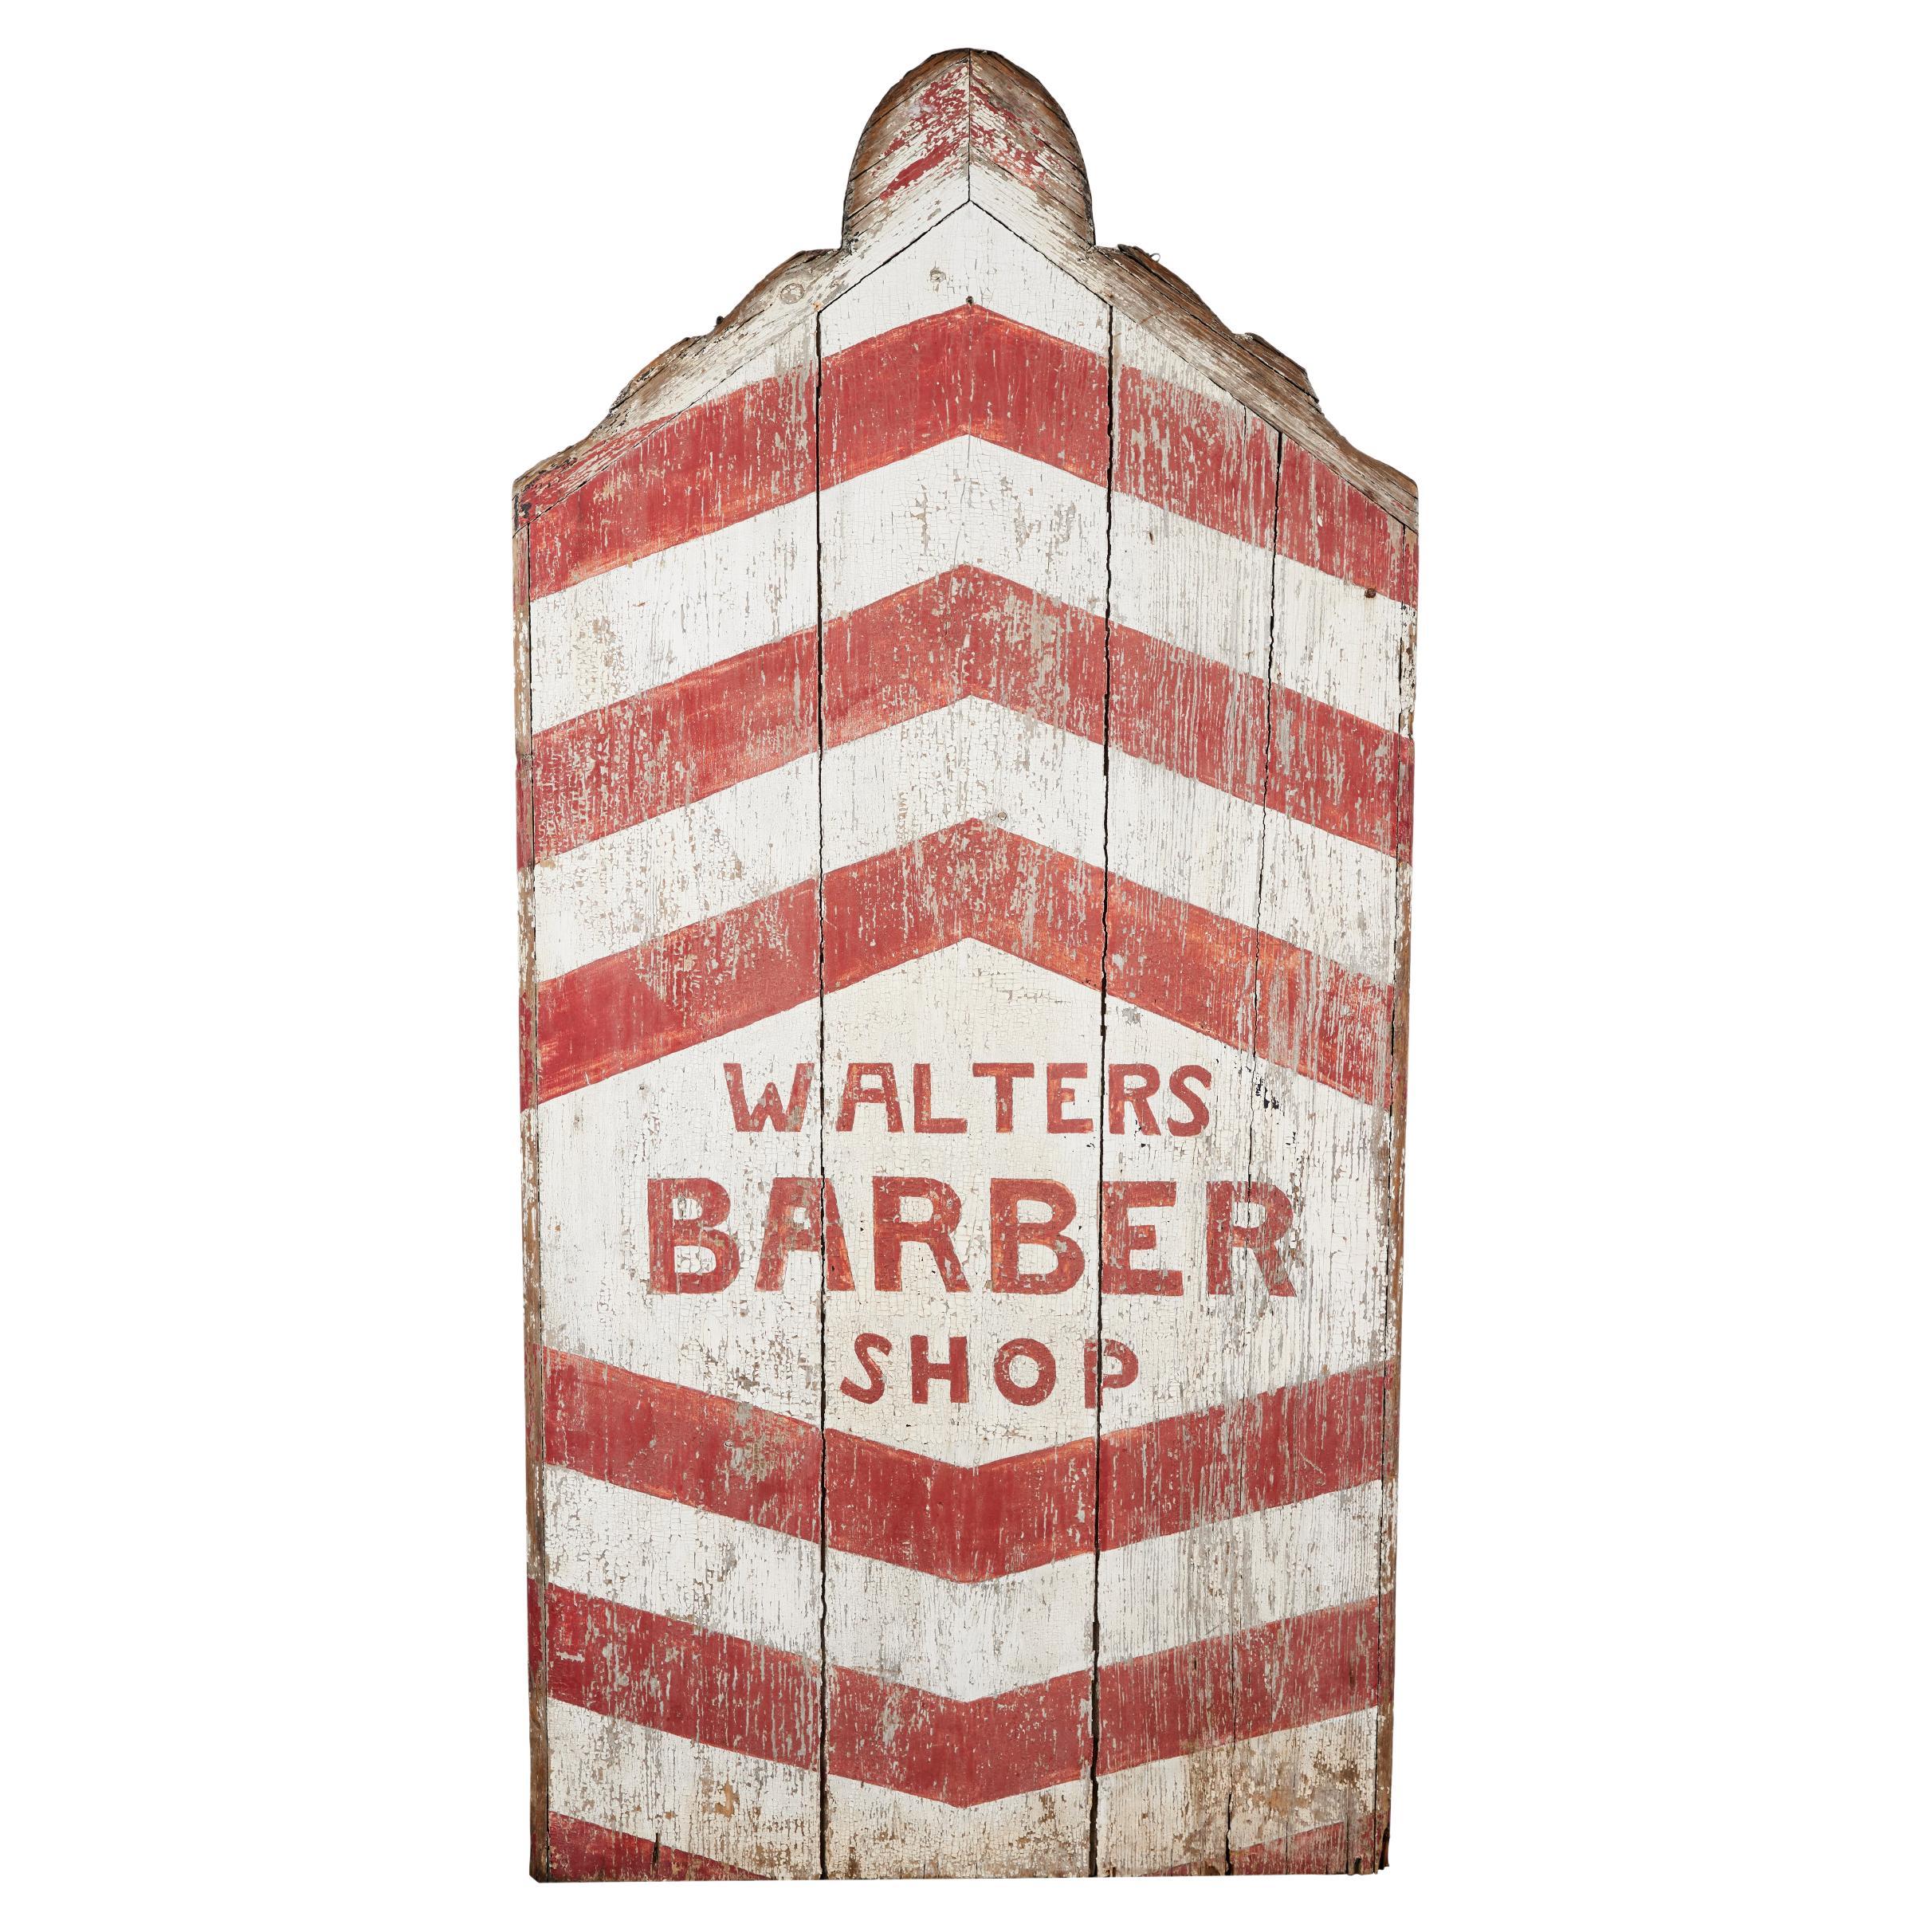 Giant Wood Handbemaltes Americana Barber Shop-Schild aus dem frühen 20. Jahrhundert